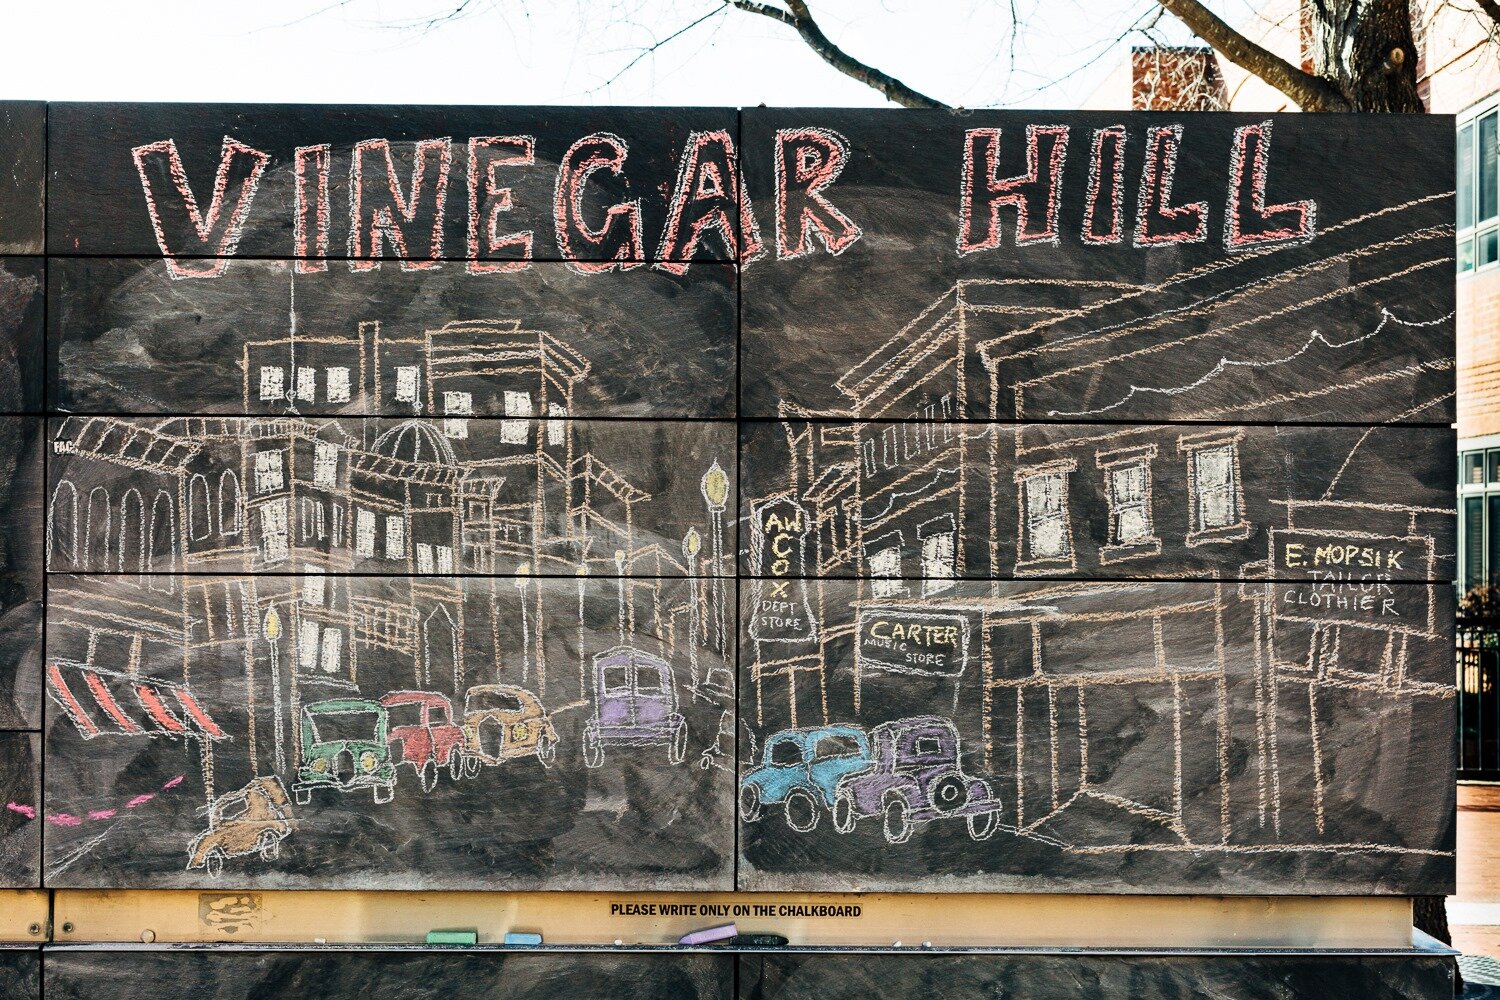  Writing &amp; Drawing of Vinegar Hill by Sri Kodakalla. Photo by Elizabeth Stark. 